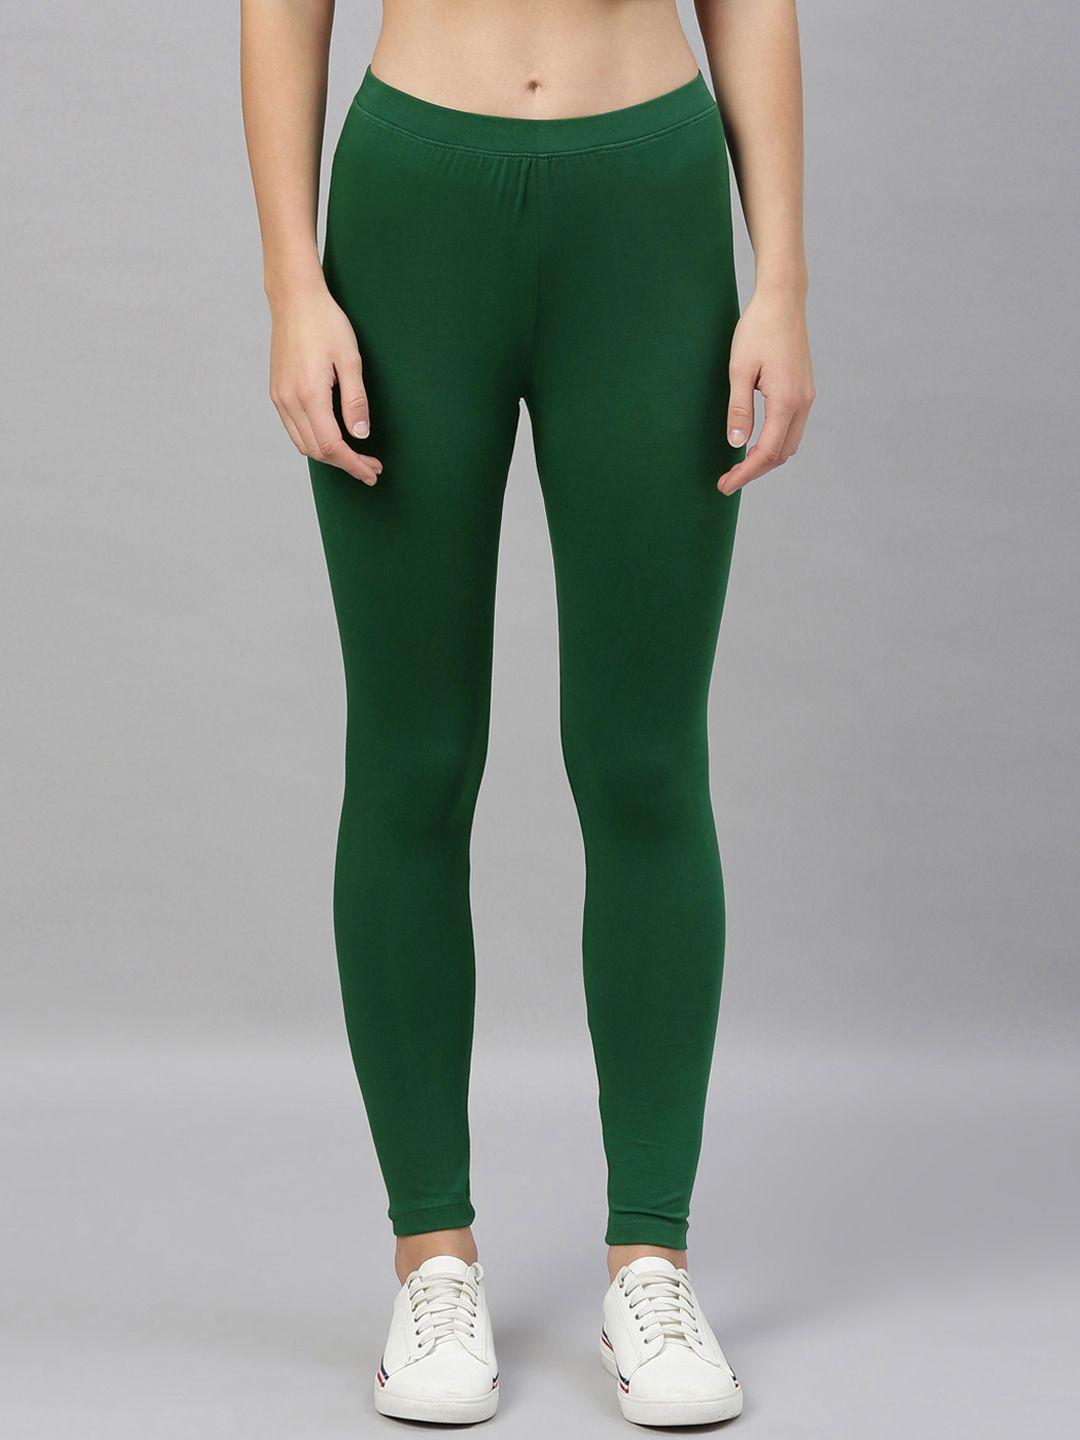 kryptic women green solid ankle length leggings